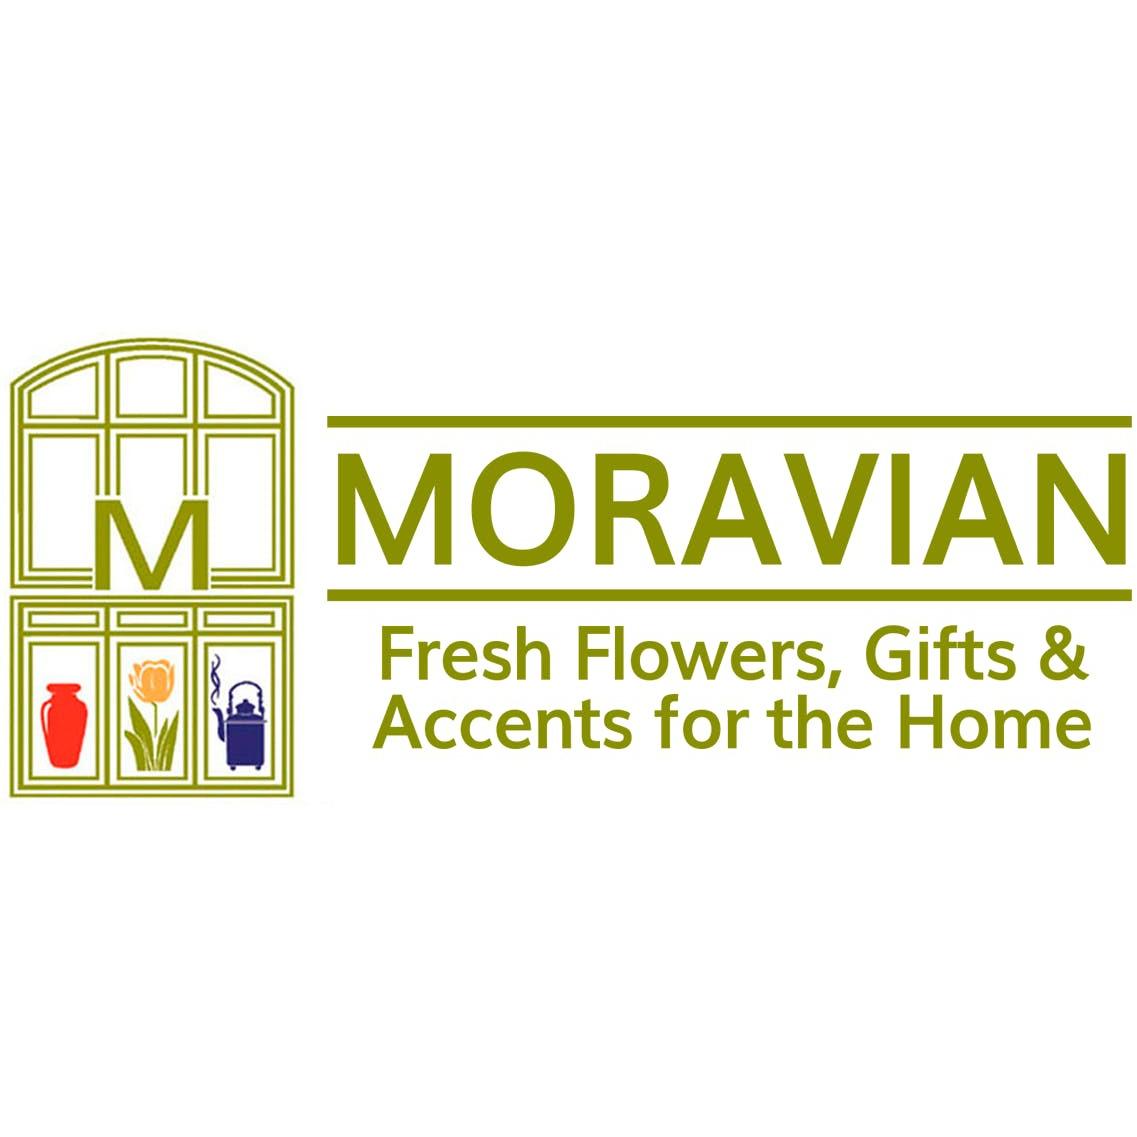 Moravian Florist - Staten Island, NY 10306 - (718)351-4440 | ShowMeLocal.com